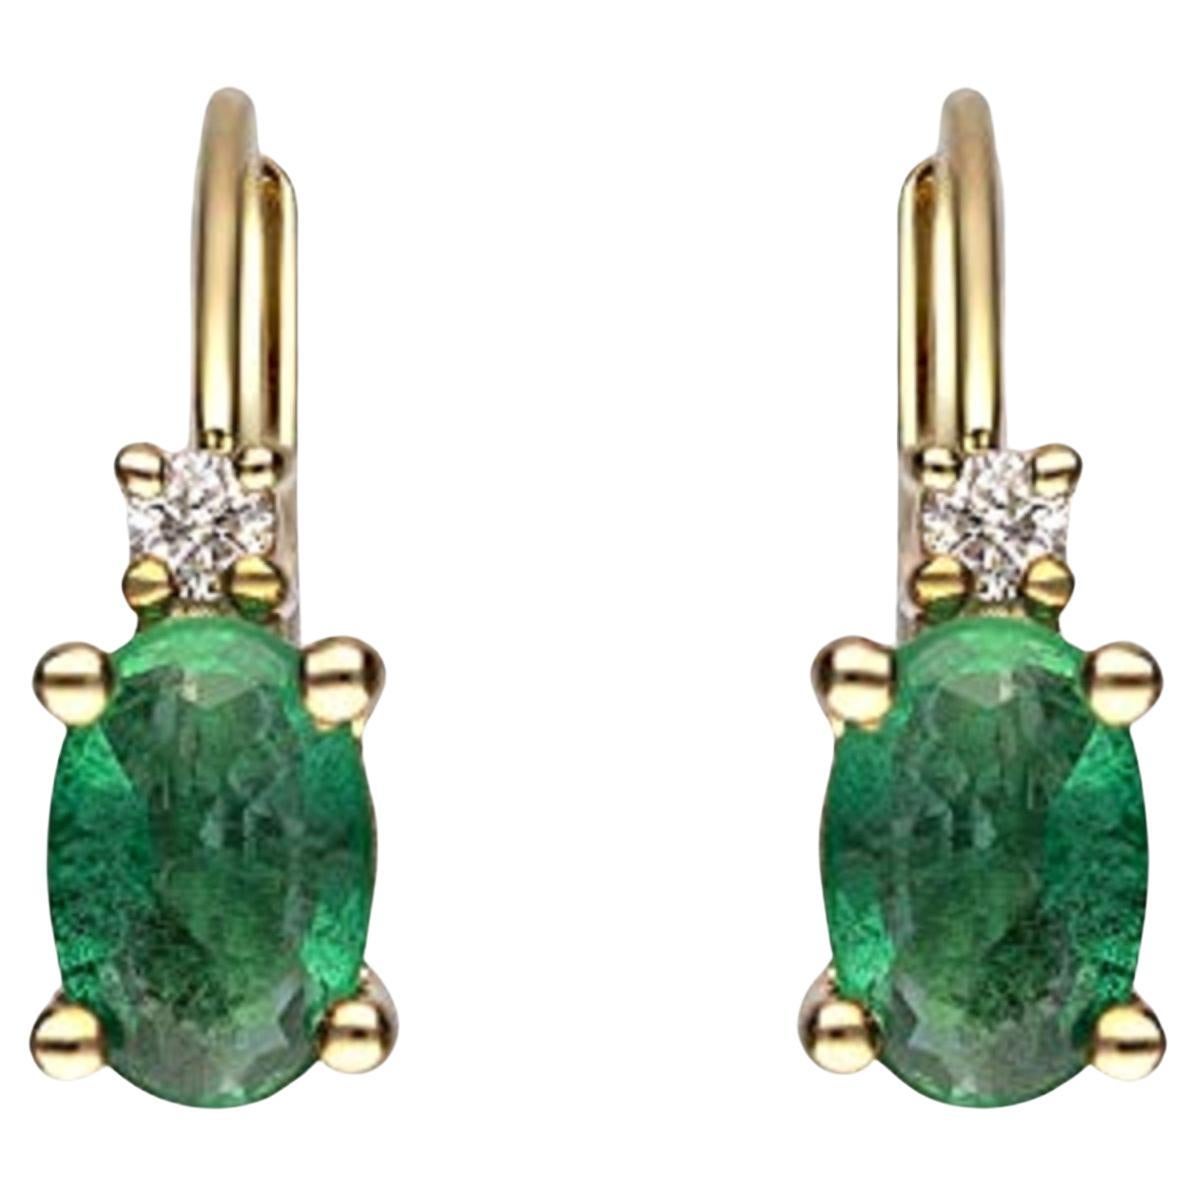 Gin & Grace 10KY Gold Zambian Emerald Earrings with Natural Diamond For Women